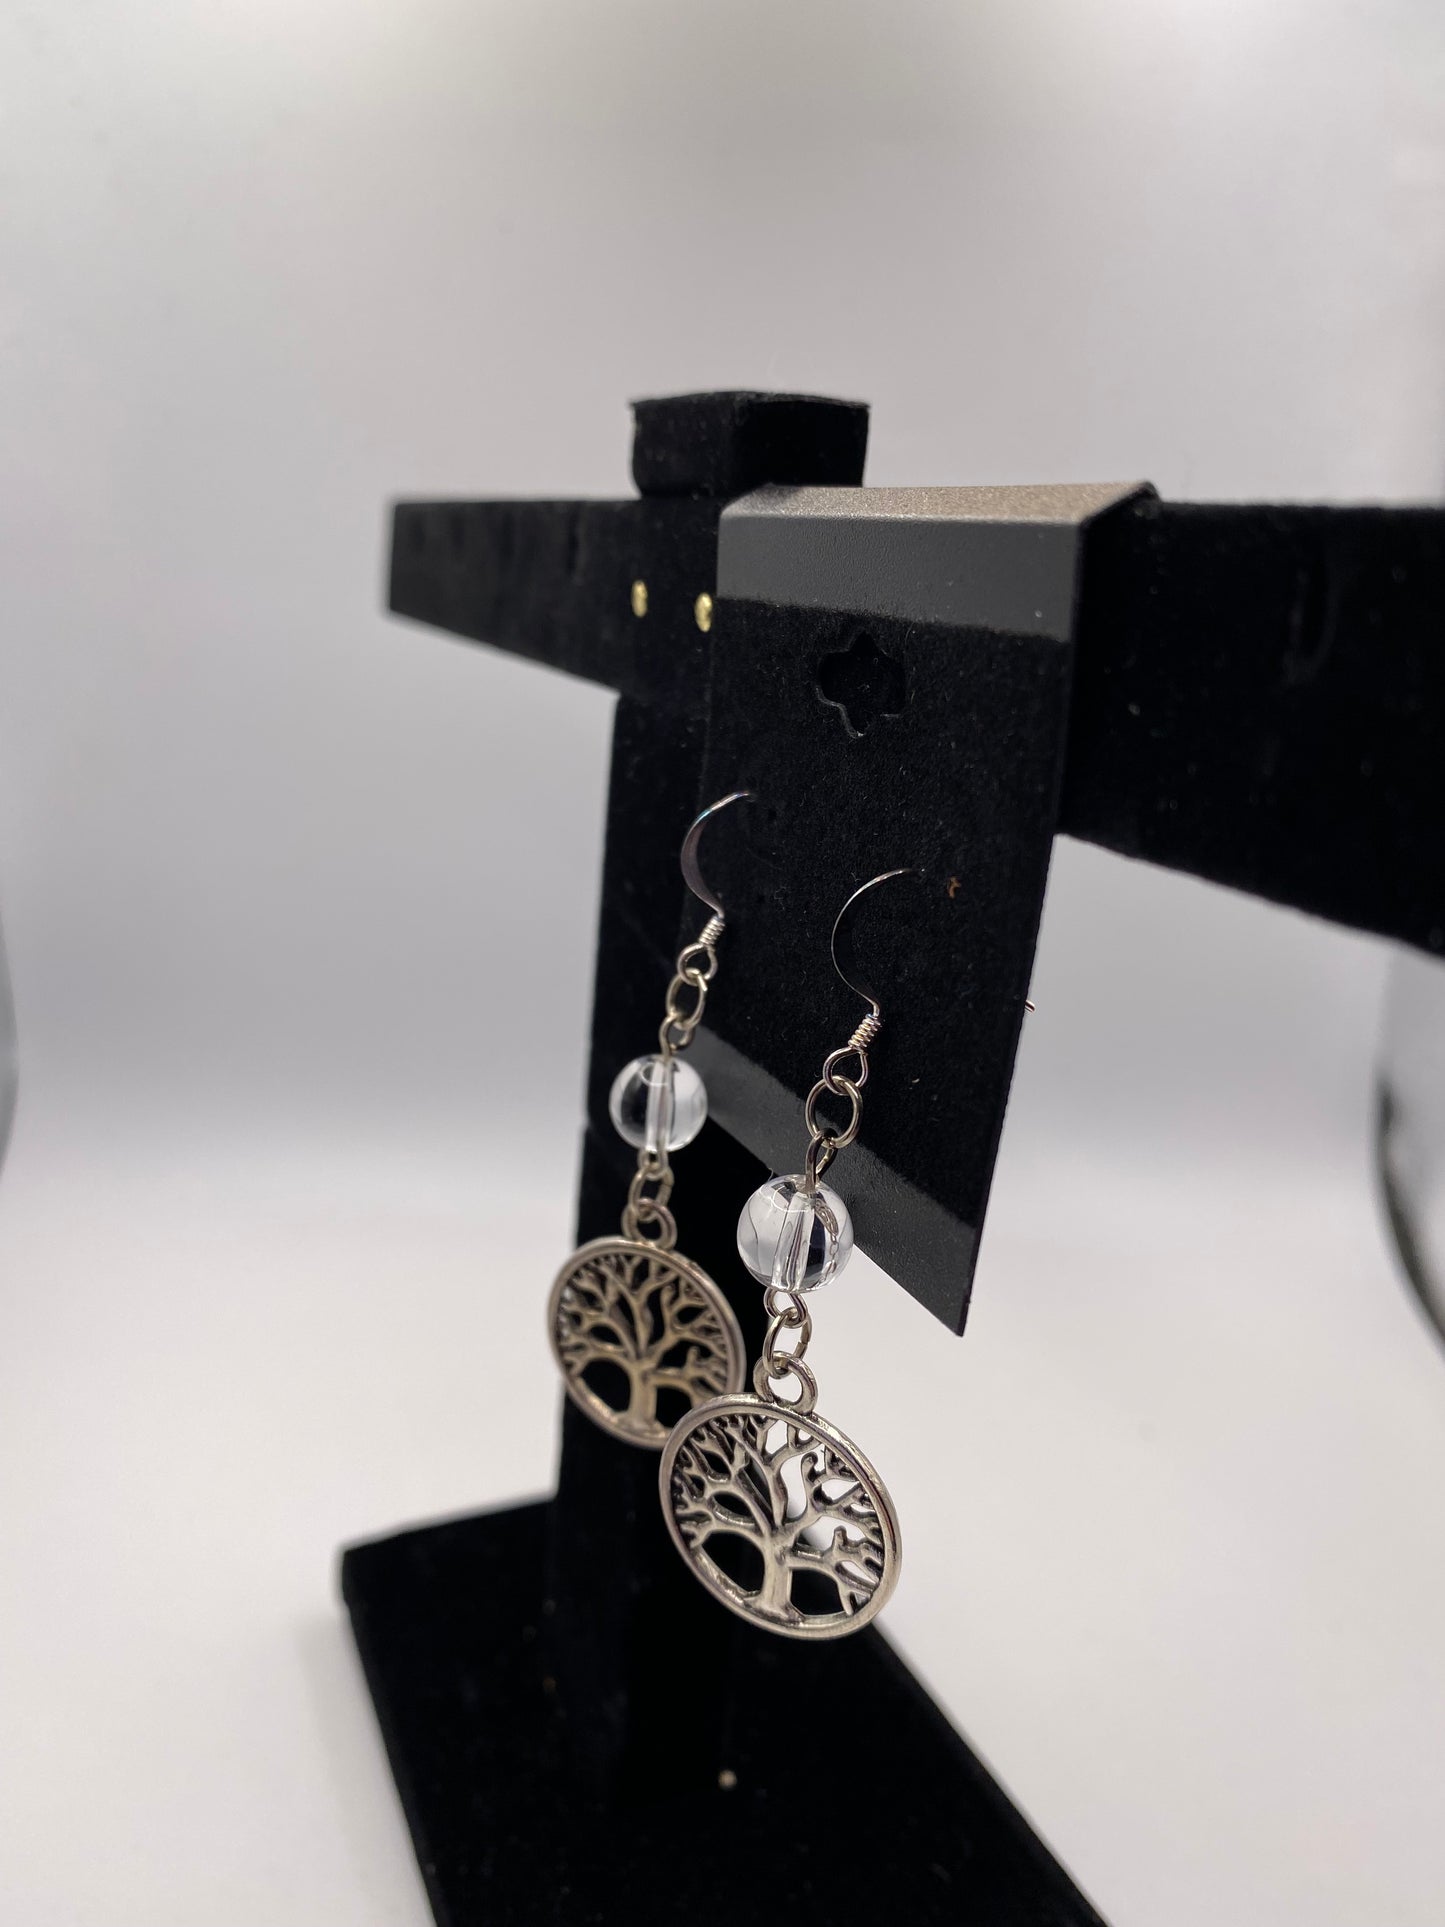 Celtic Tree of Life Earrings with Semi-Precious Stones